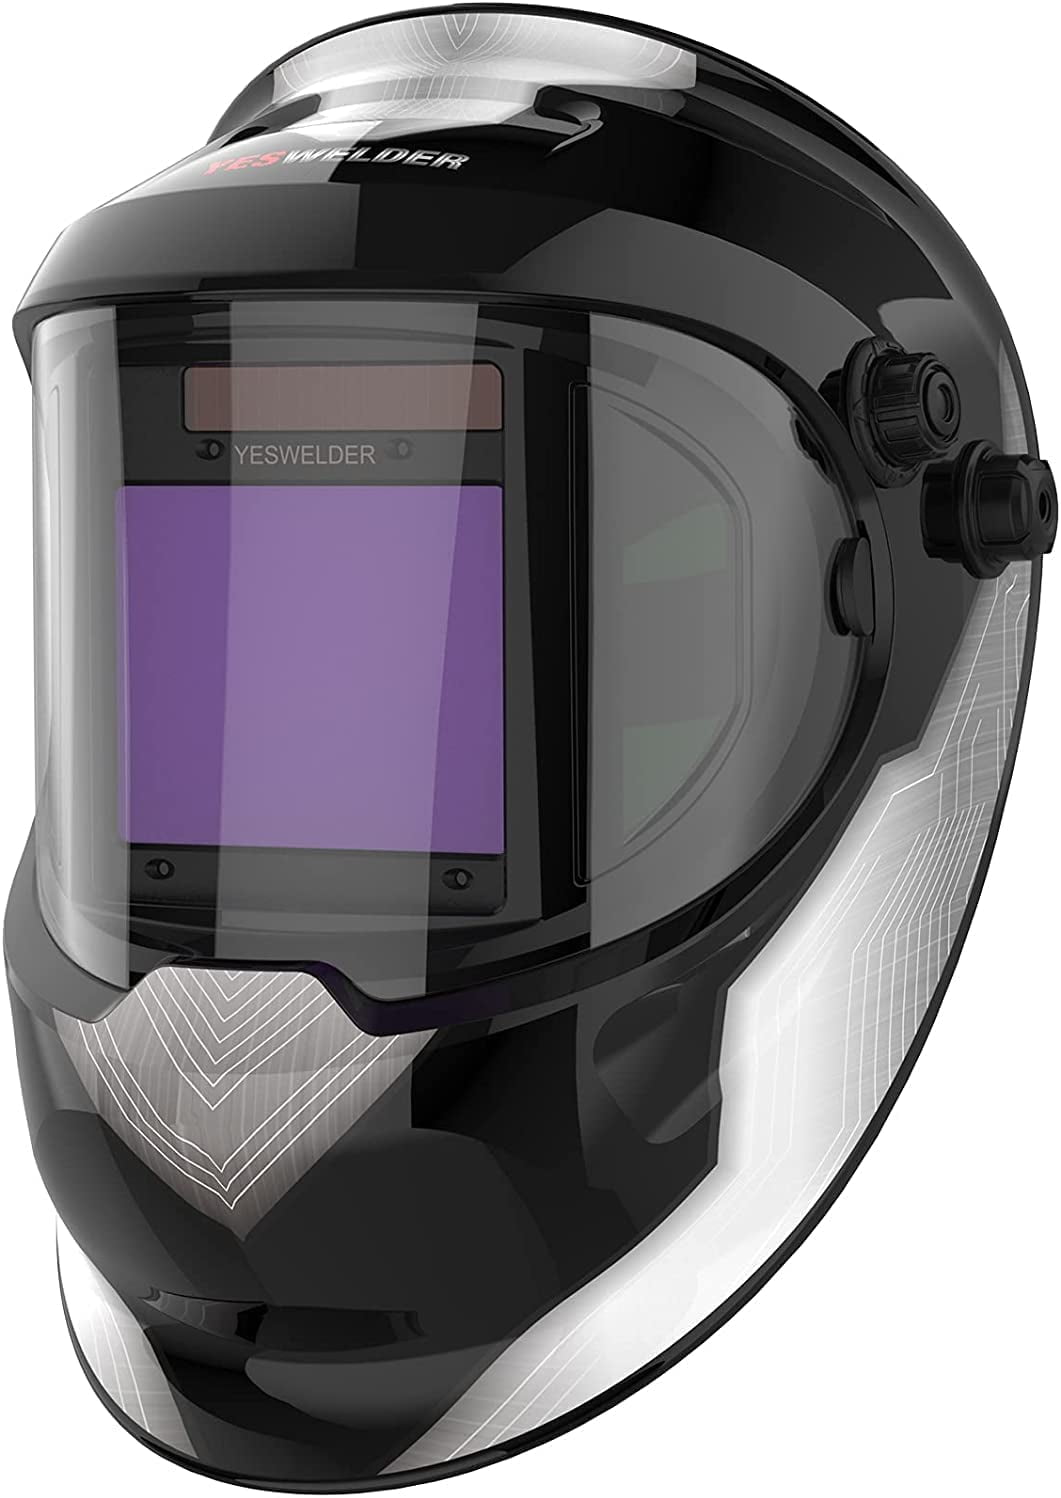 Auto Darkening Hood with Adjustable 4/9-13 for Mig Tig Arc Welding Helmet Mask 